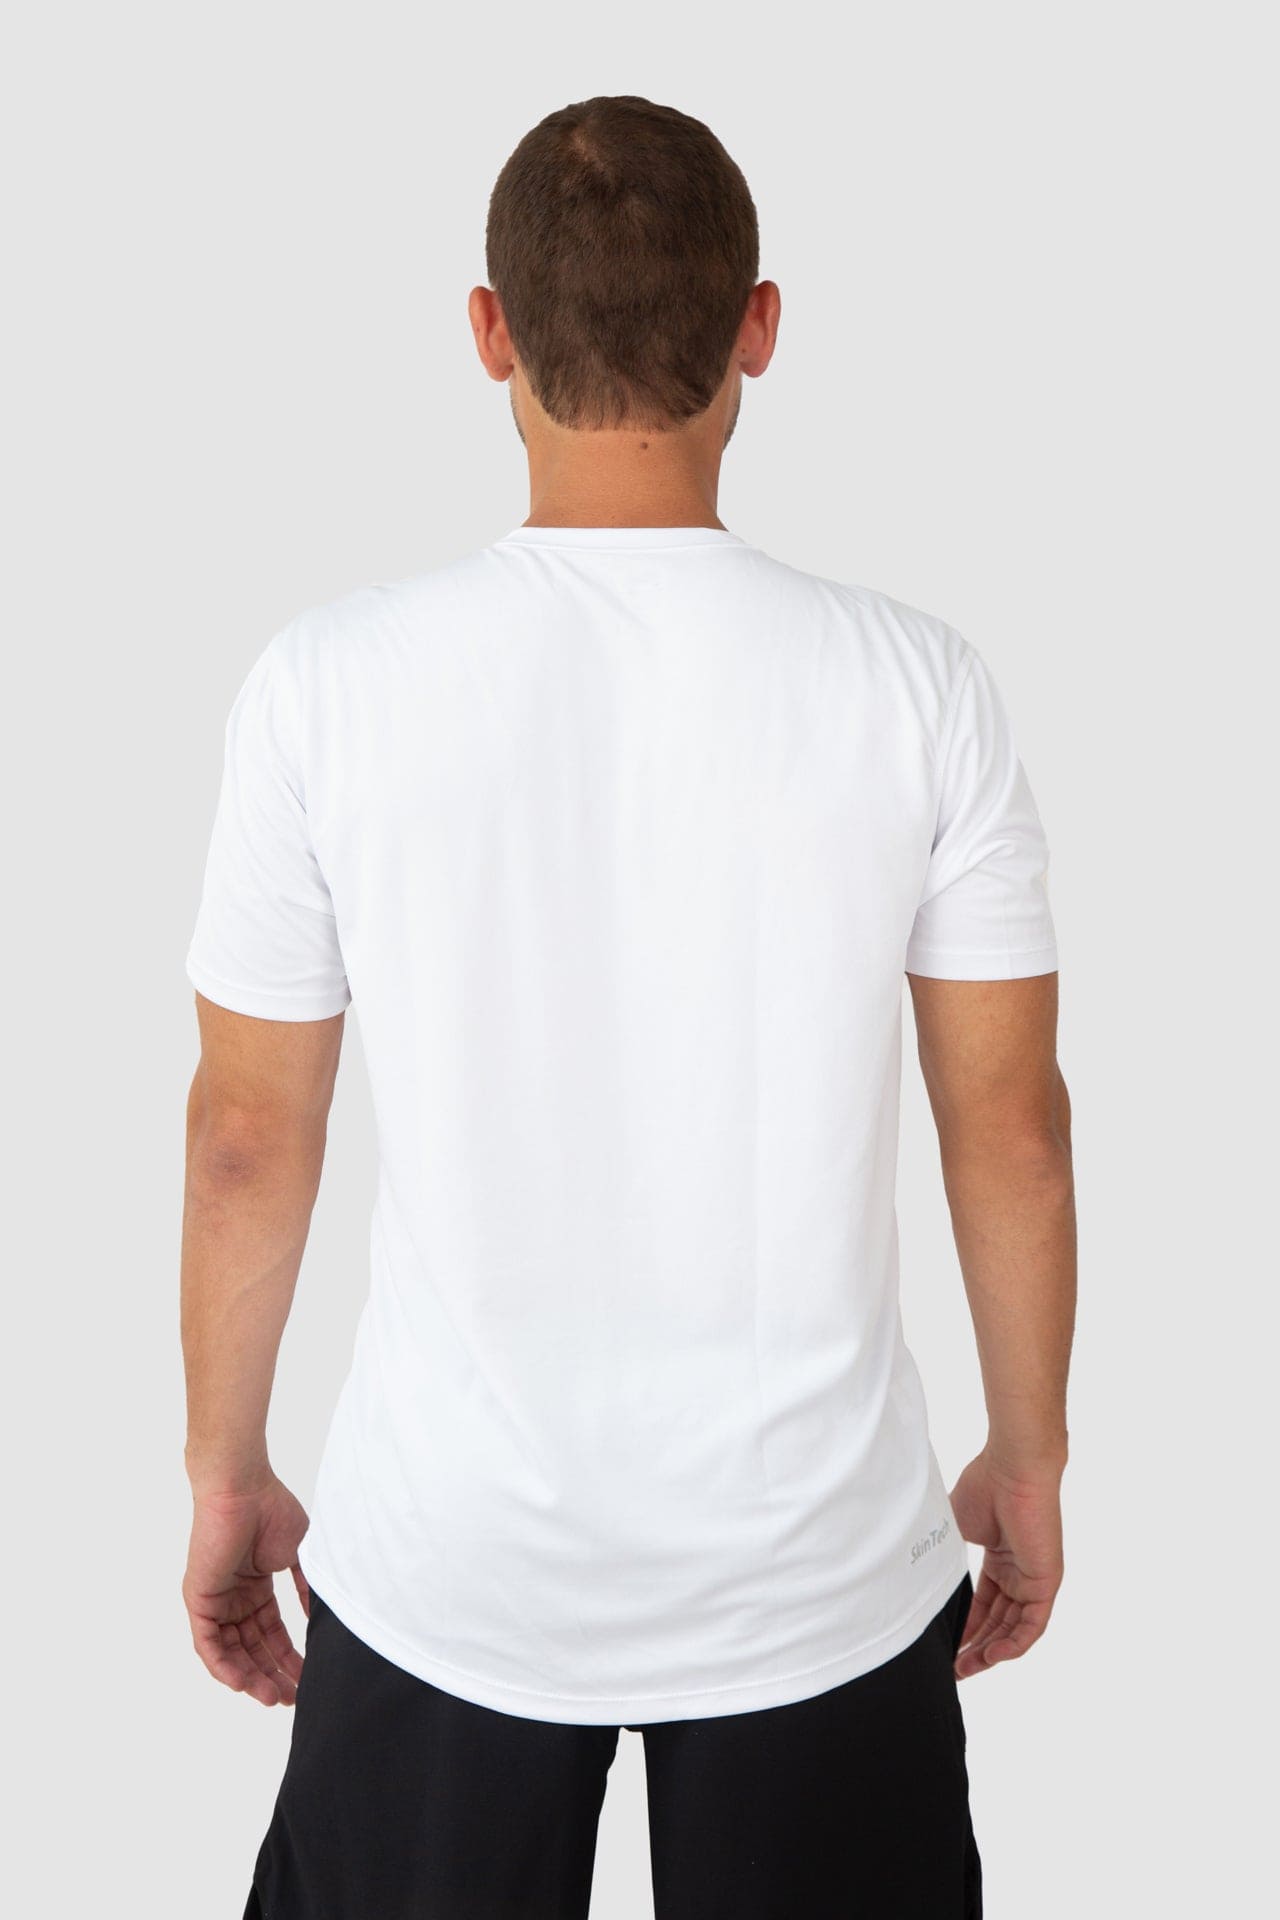 Camiseta Padel White